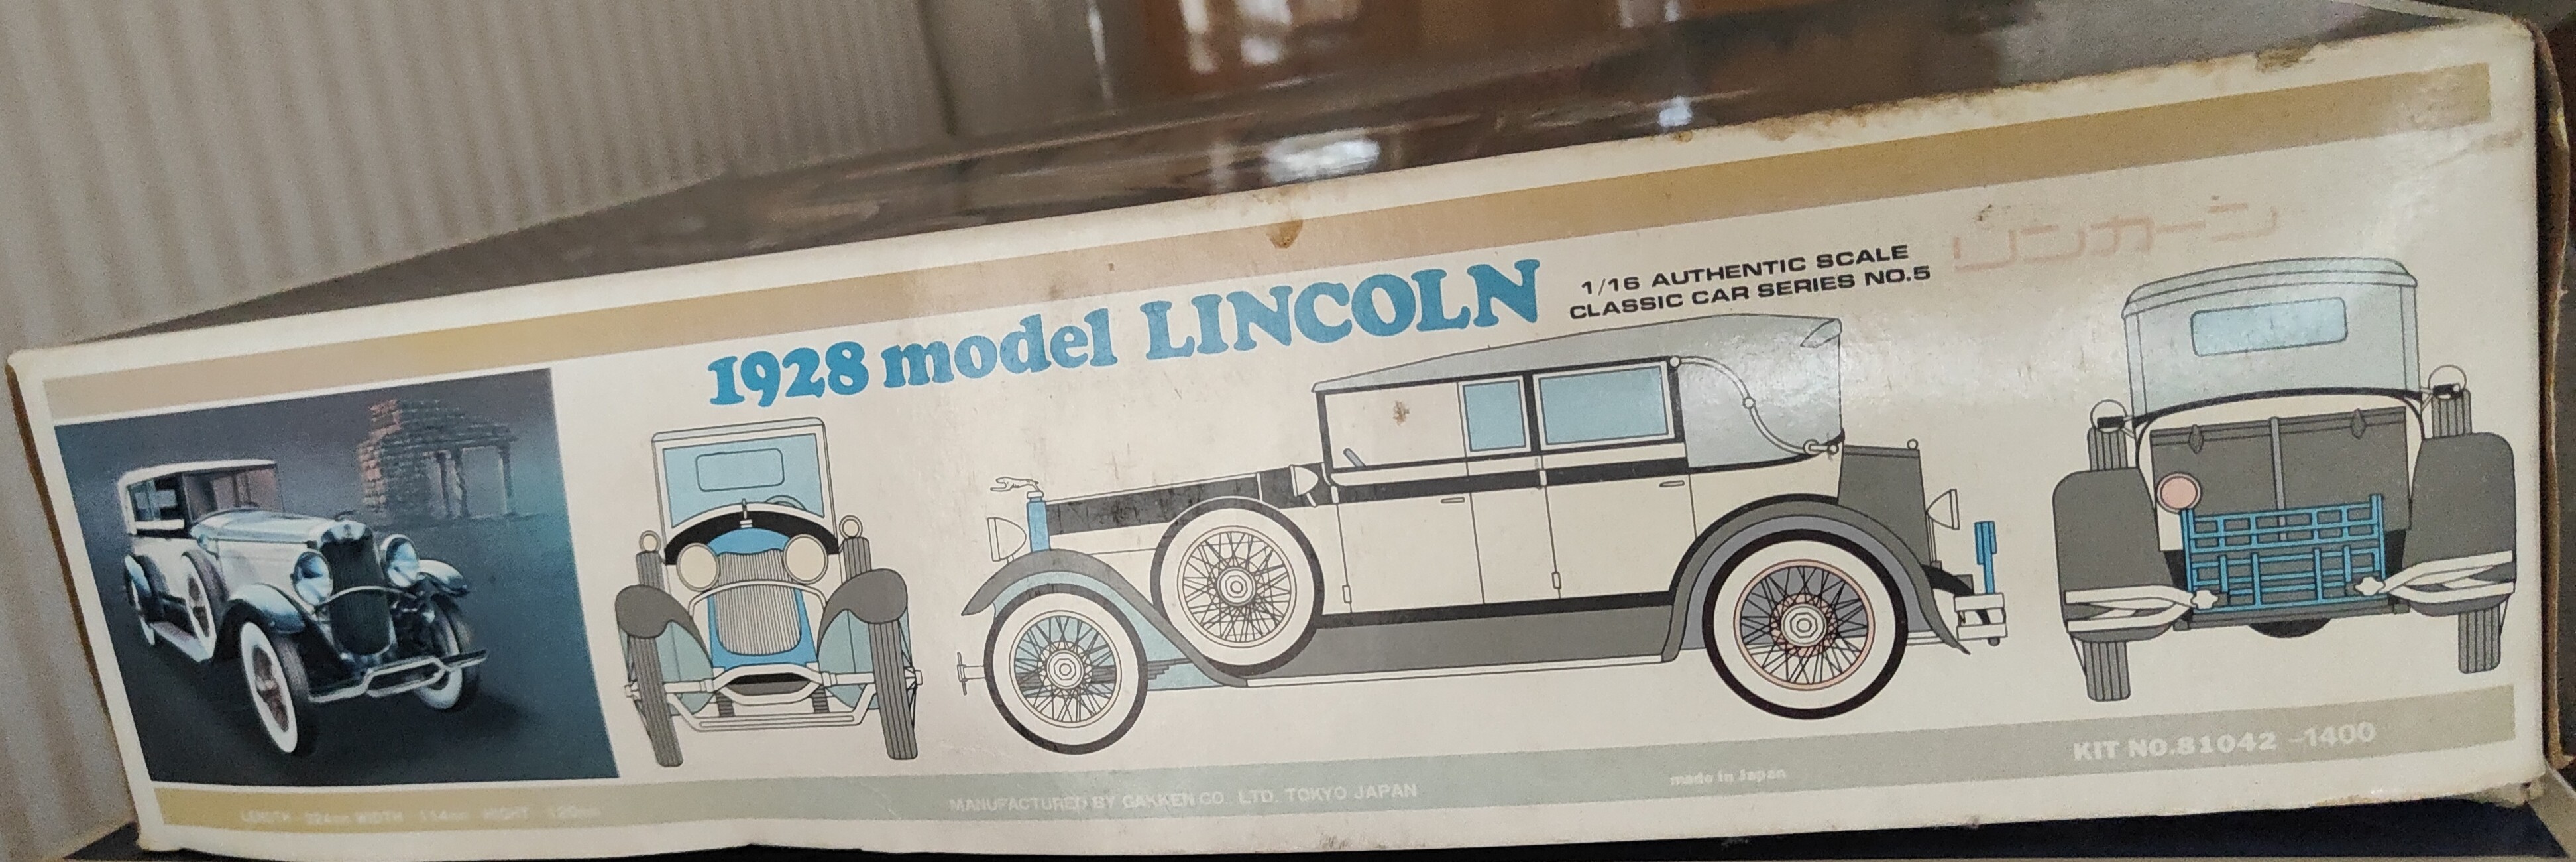 1928 Lincoln Car Model